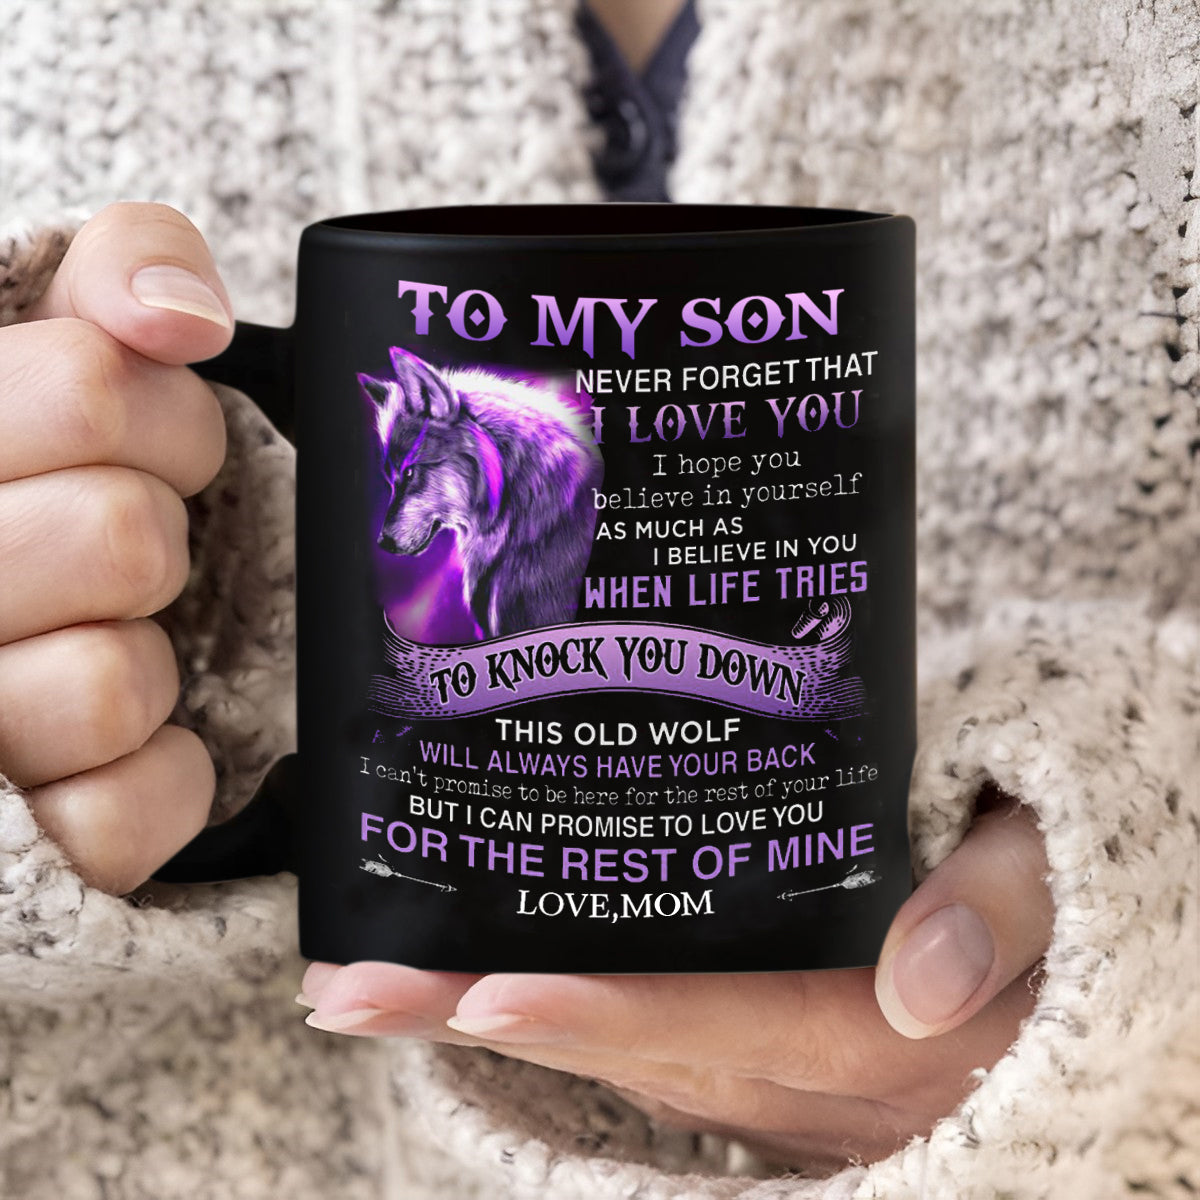 To my Son - Mom Mugs